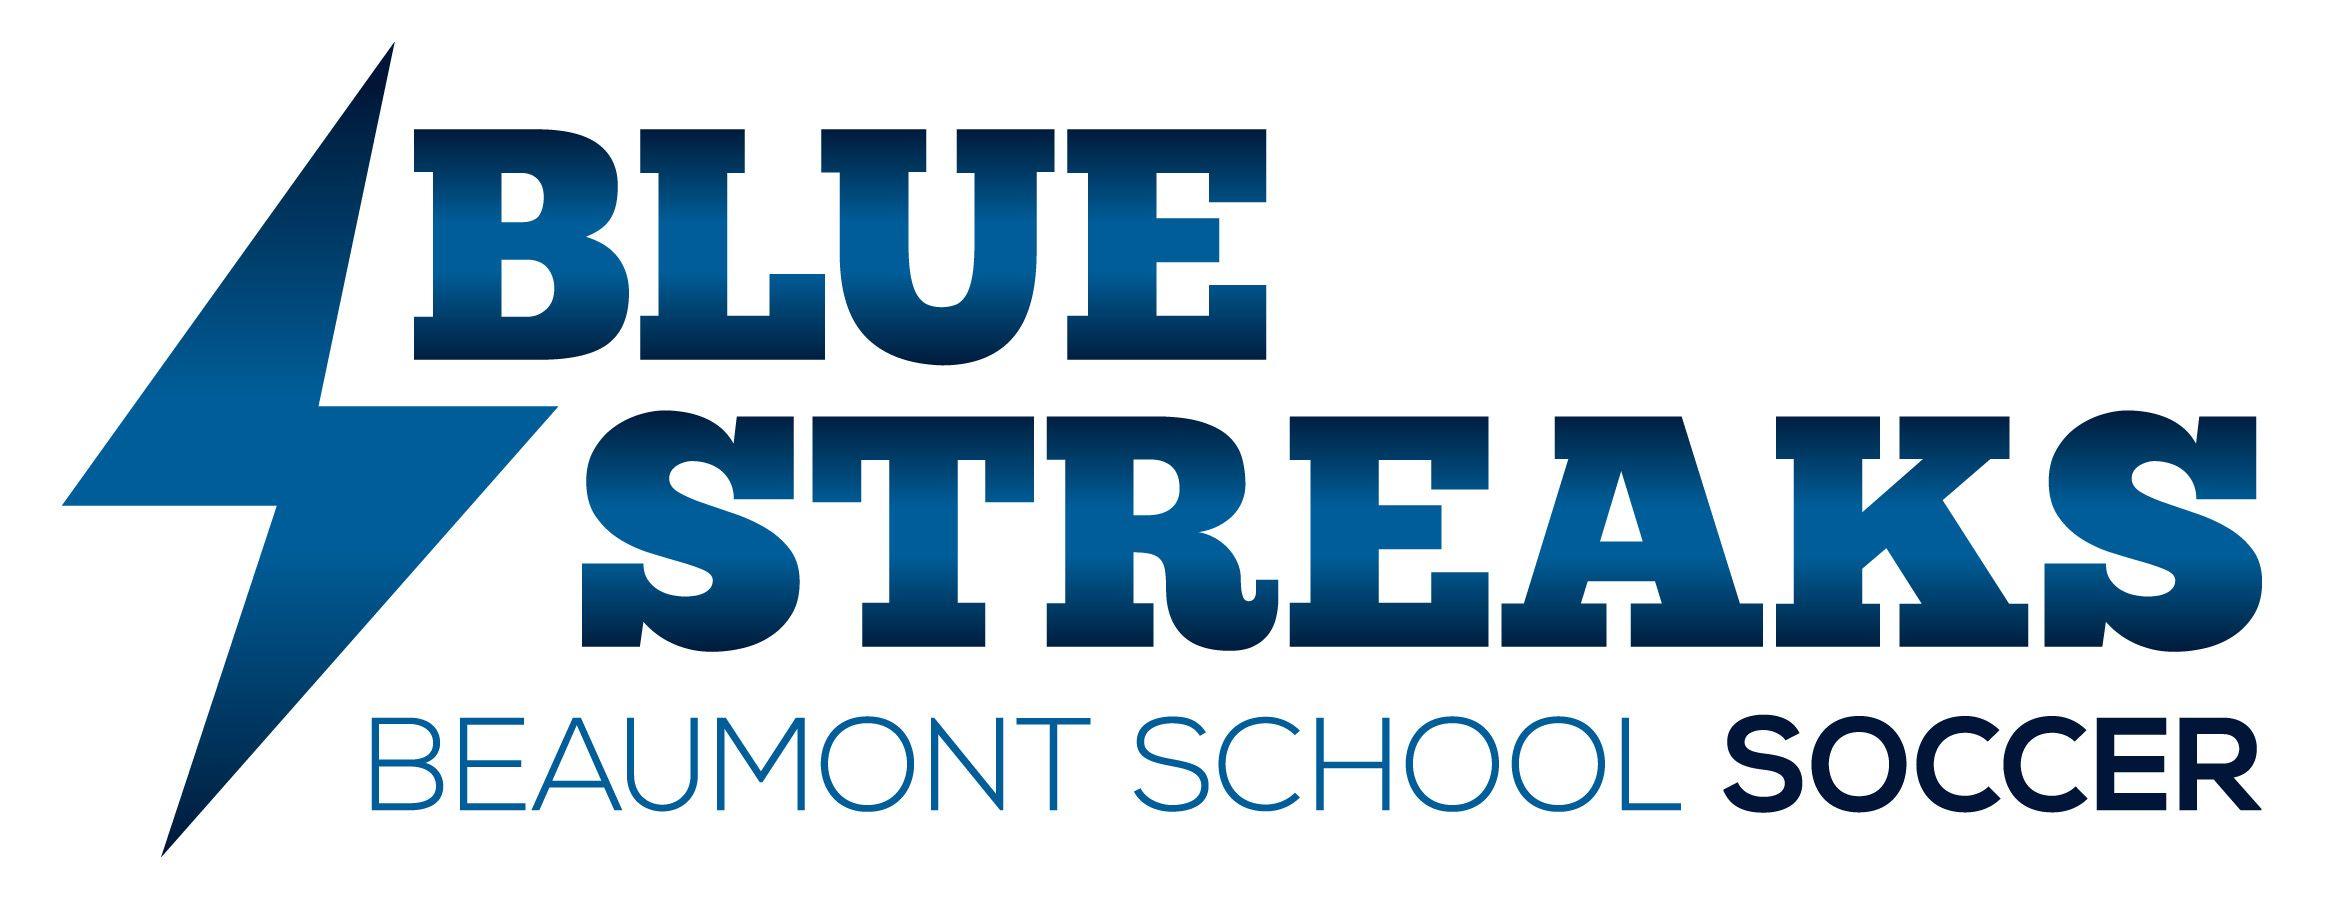 Blue Beaumont Logo - Beaumont School - Team Home Beaumont School Blue Streaks Sports